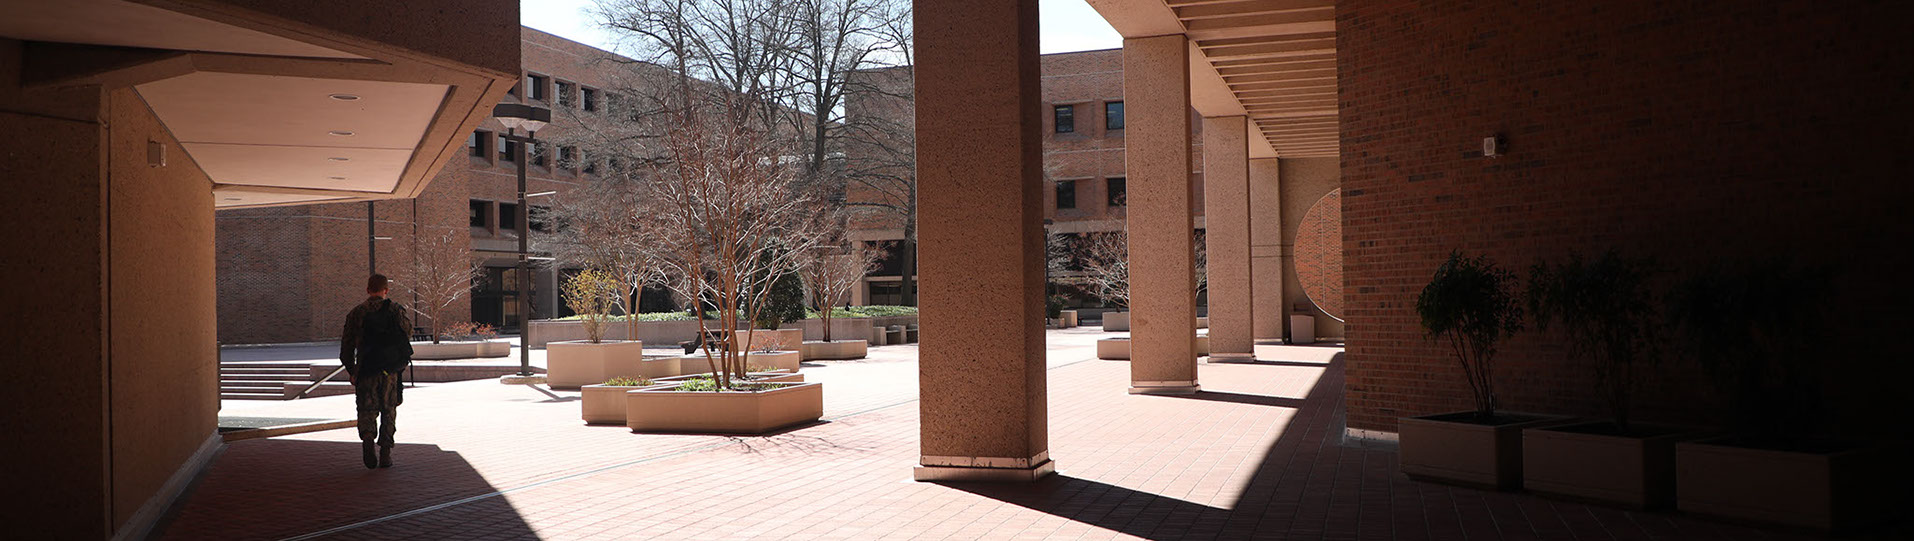 USUHS campus courtyard